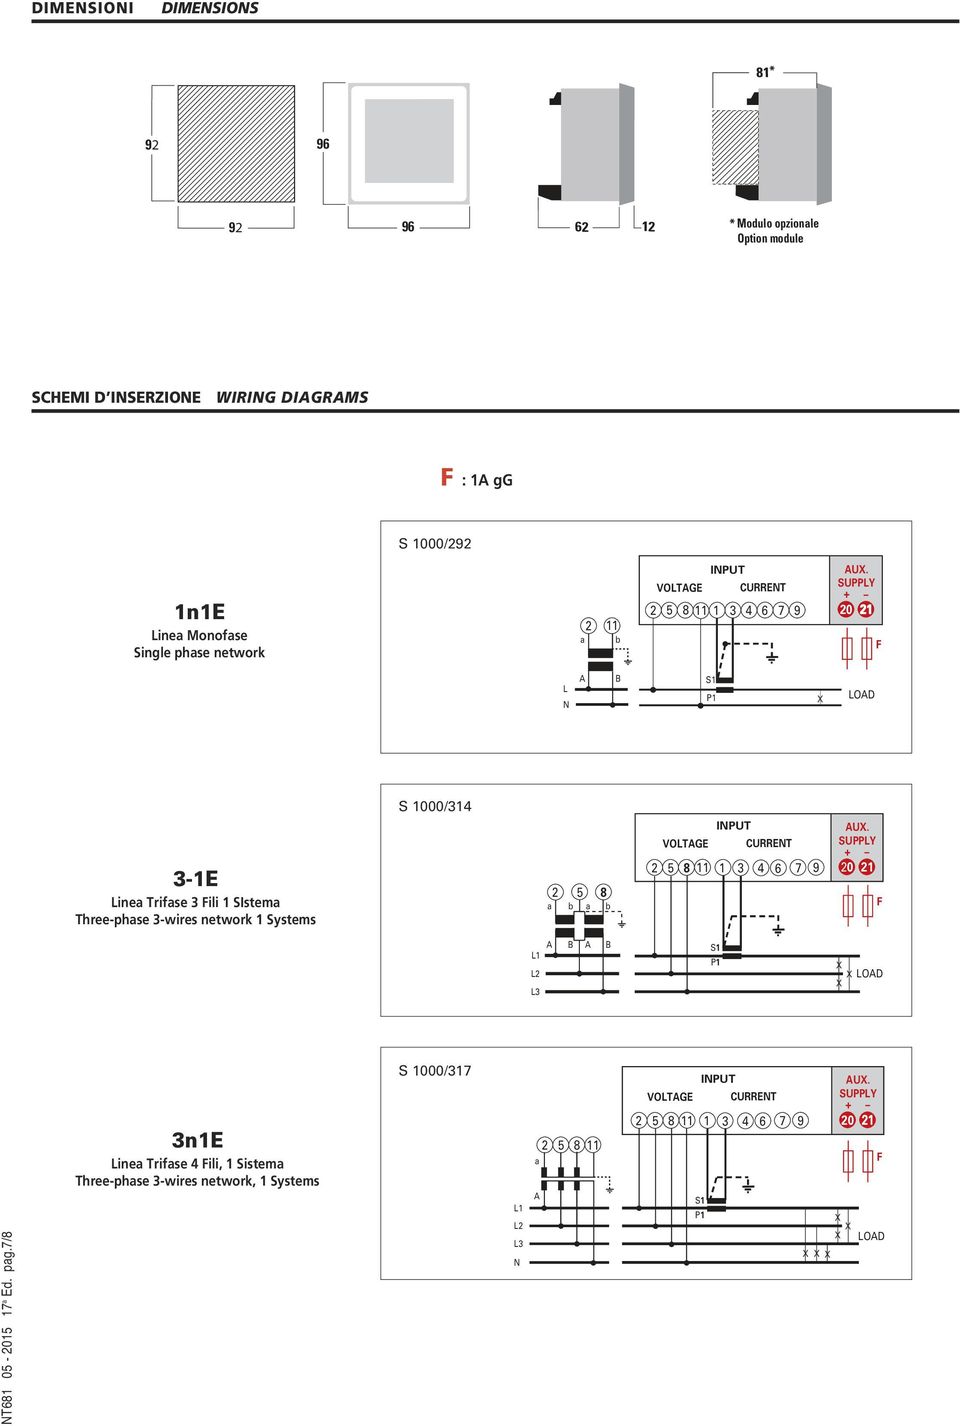 L LOD S 1000/31 3-1E Linea Trifase 3 ili 1 SIstema Three- 3-wires network 1 Systems 2 5 8 a b a b OLTGE